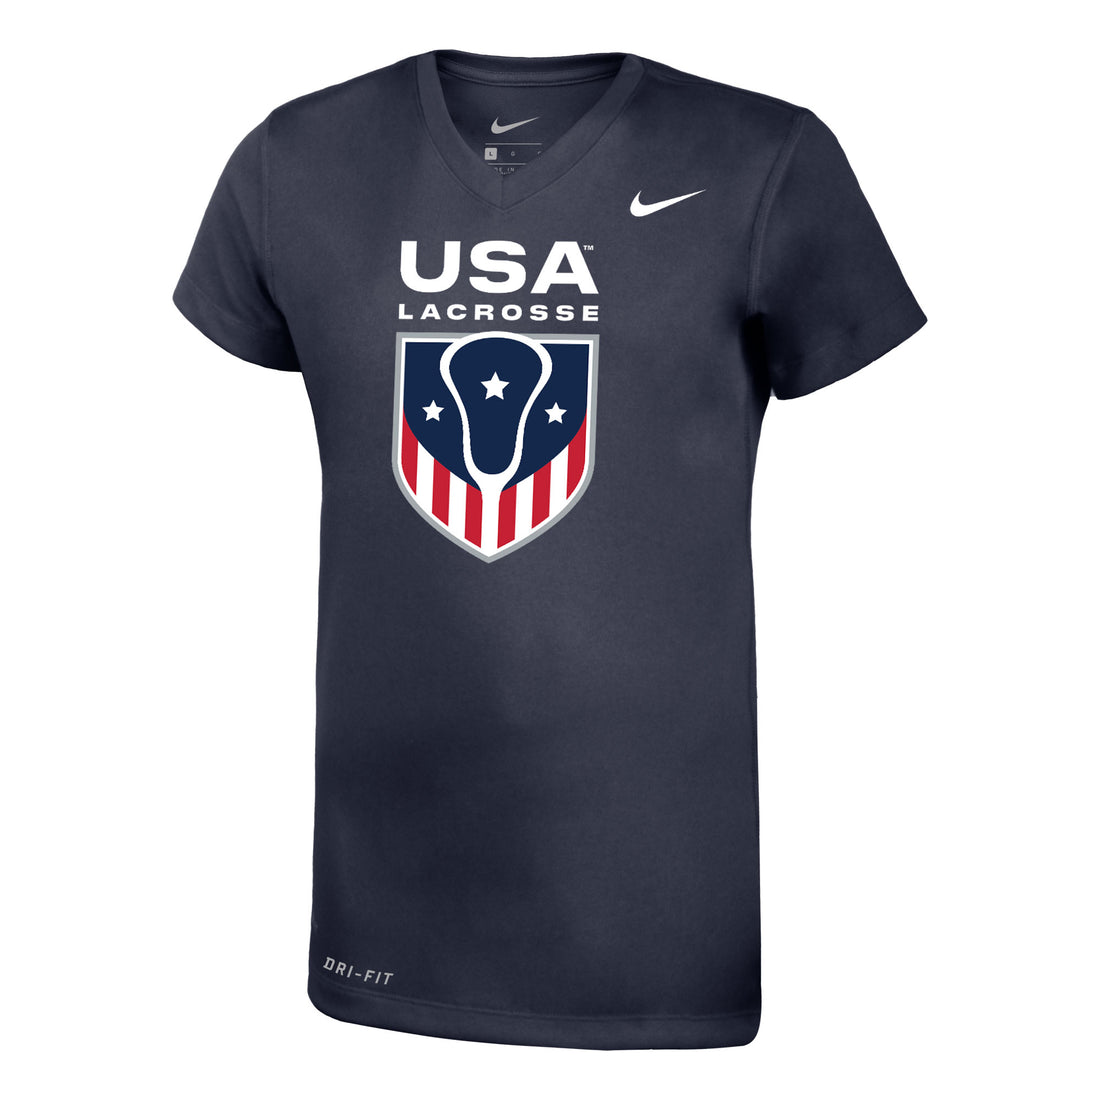 Youth Girl's USA Lacrosse Nike Dri-FIT Legend V-Neck T-Shirt